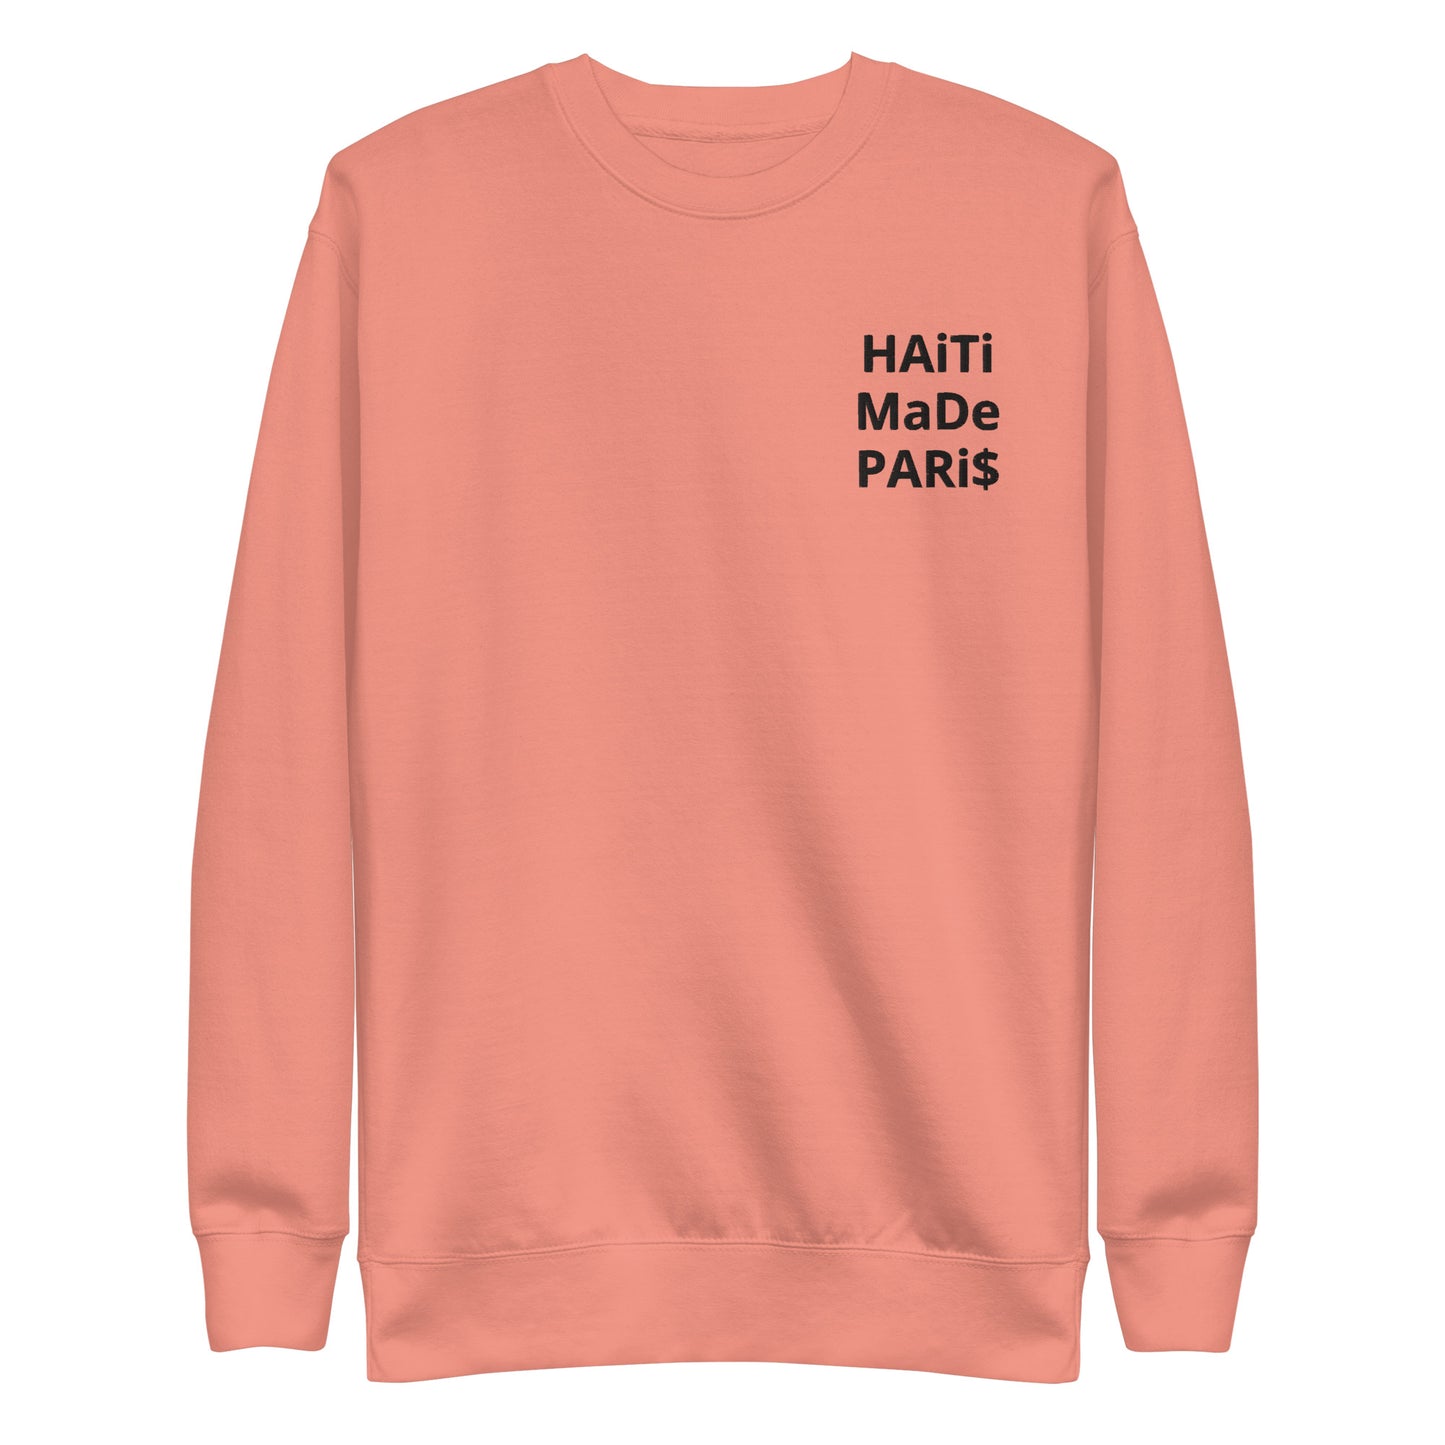 Haiti Made Paris - Sweatshirt / Jamaica Made London